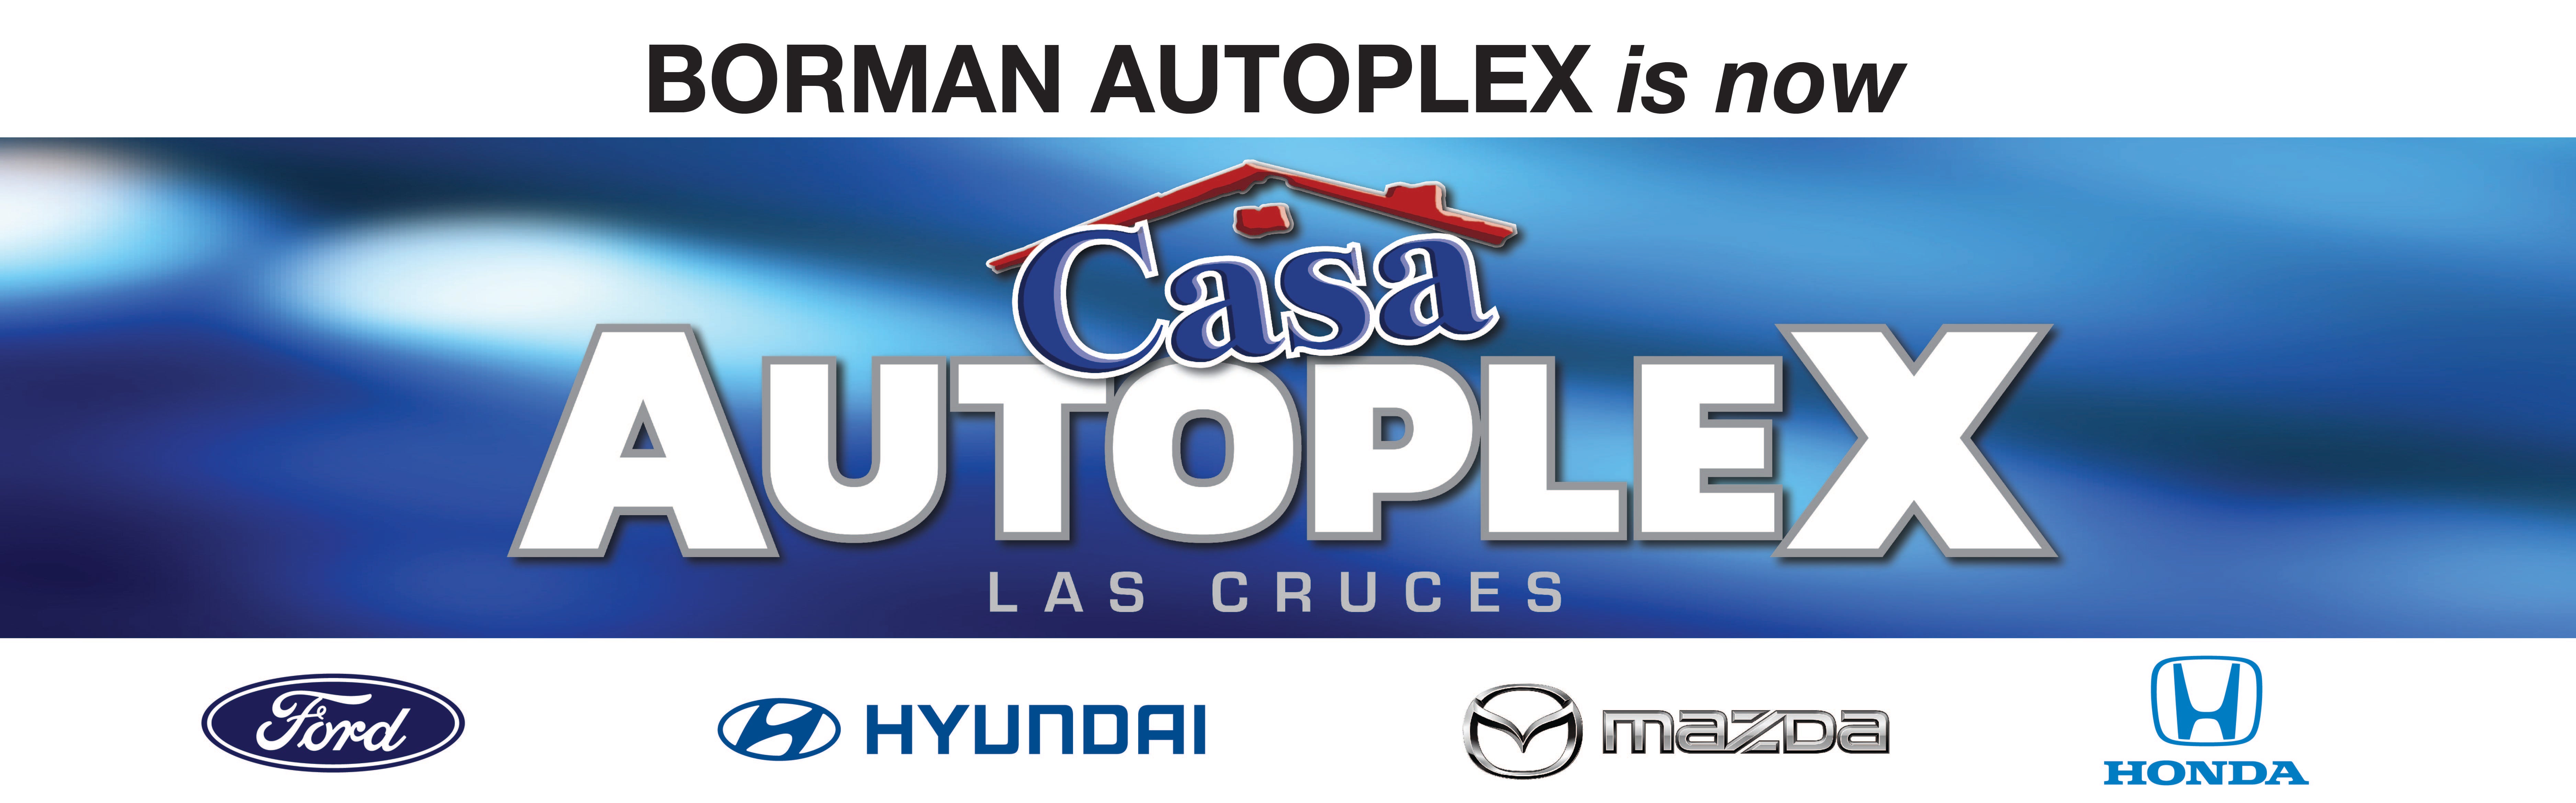 Borman Autoplex is now Casa Autoplex Las Cruces